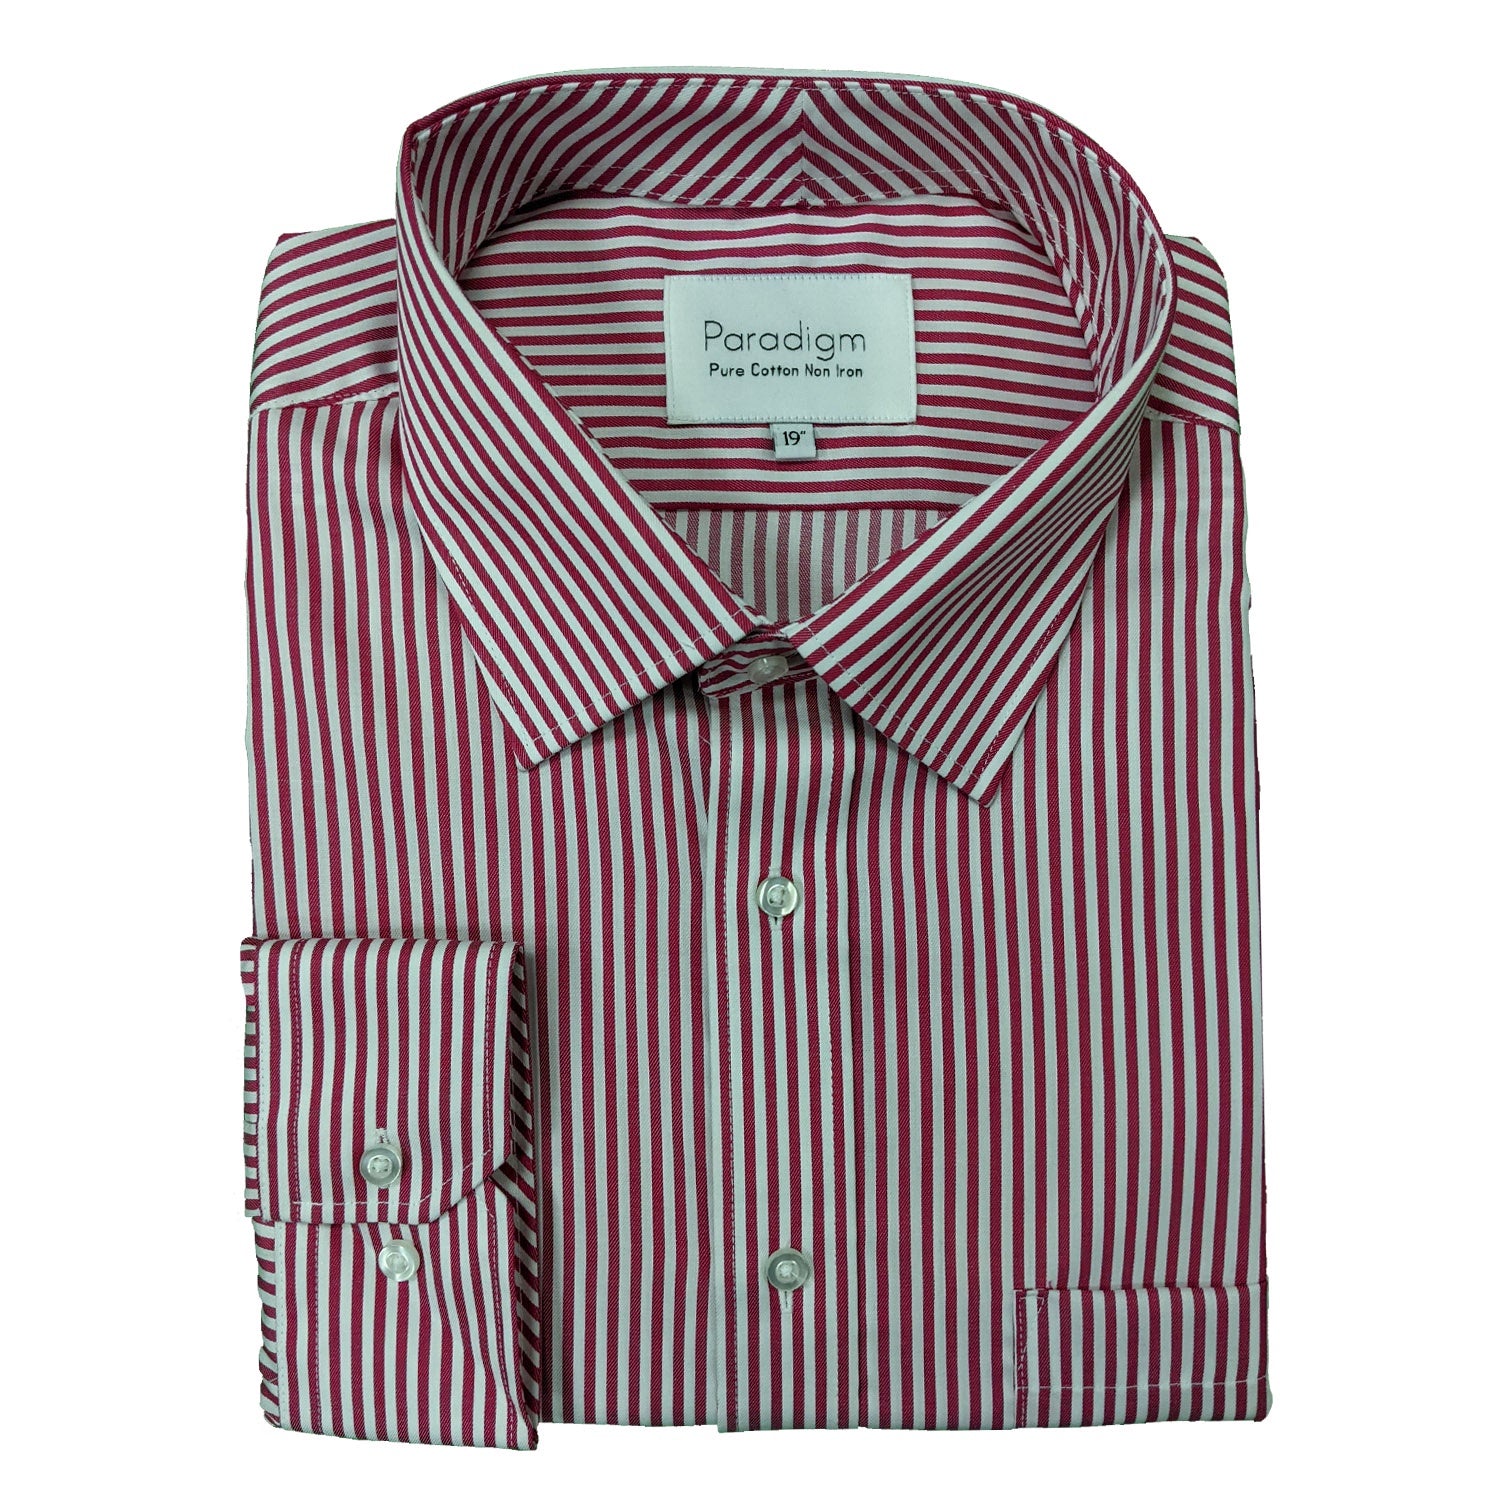 Paradigm Stripe Shirt - CX7030 - Cherry 1